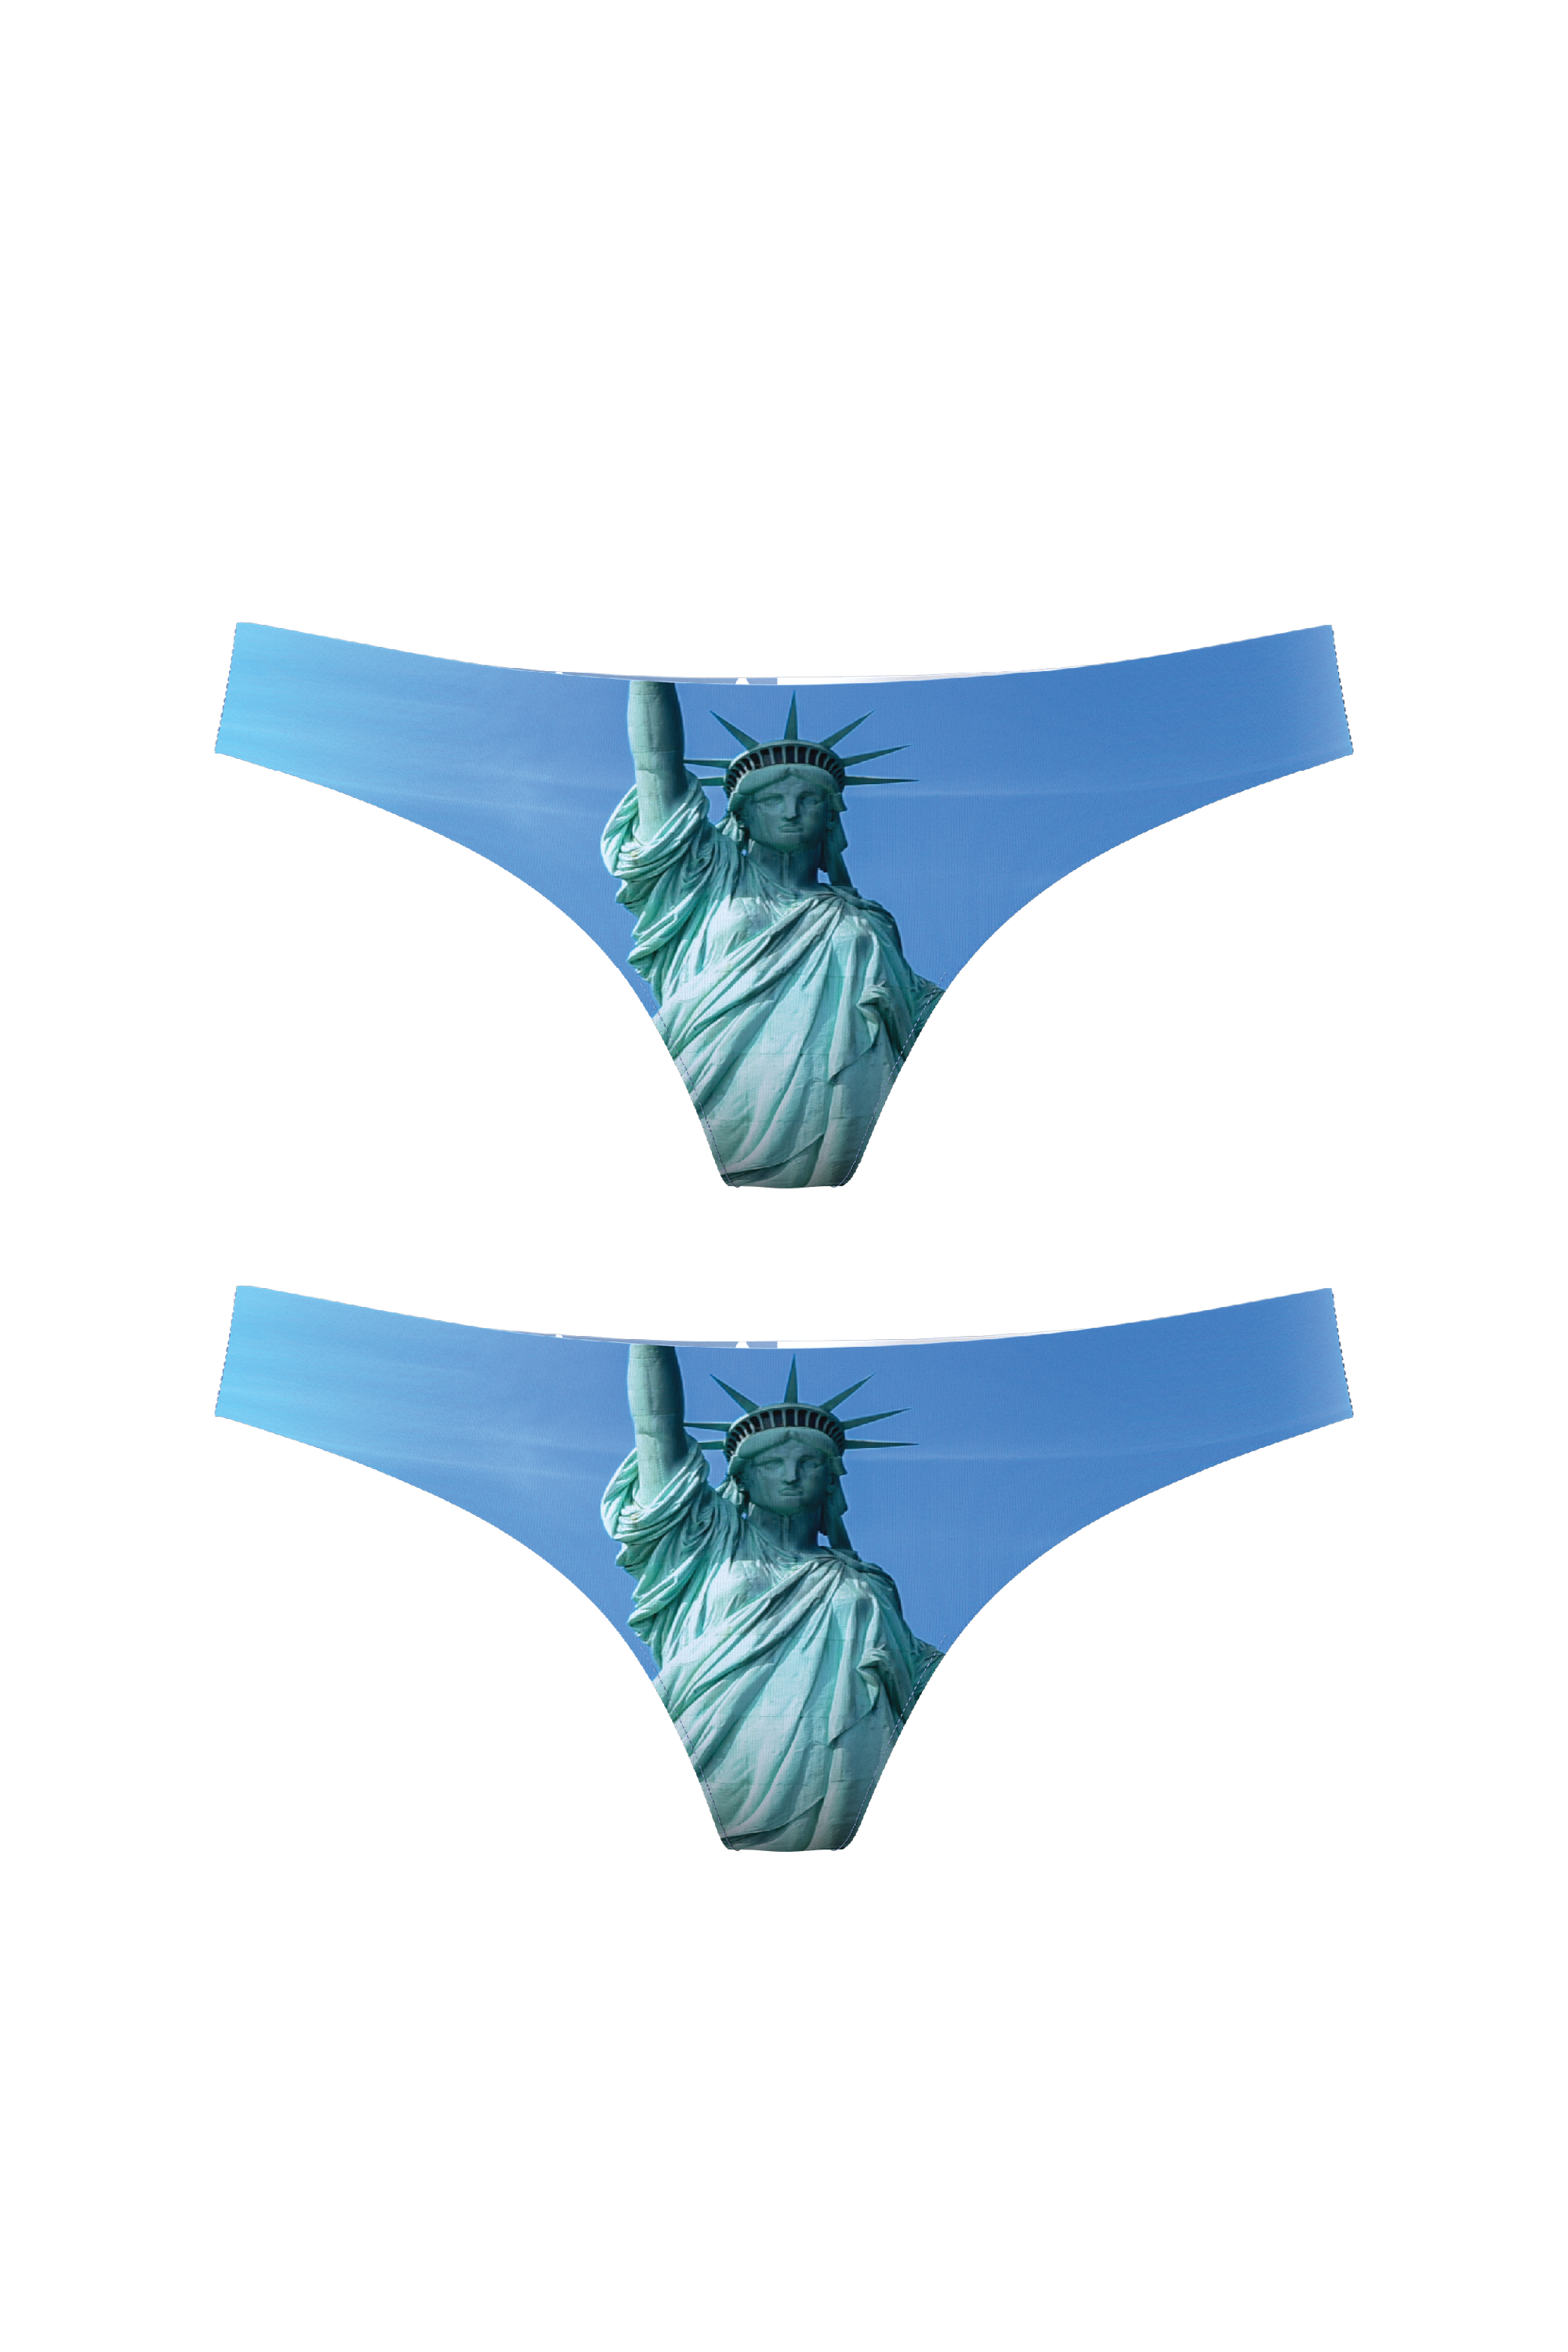 LBECLEY Couples Underwear Matching Set Women Underwear Lace Low